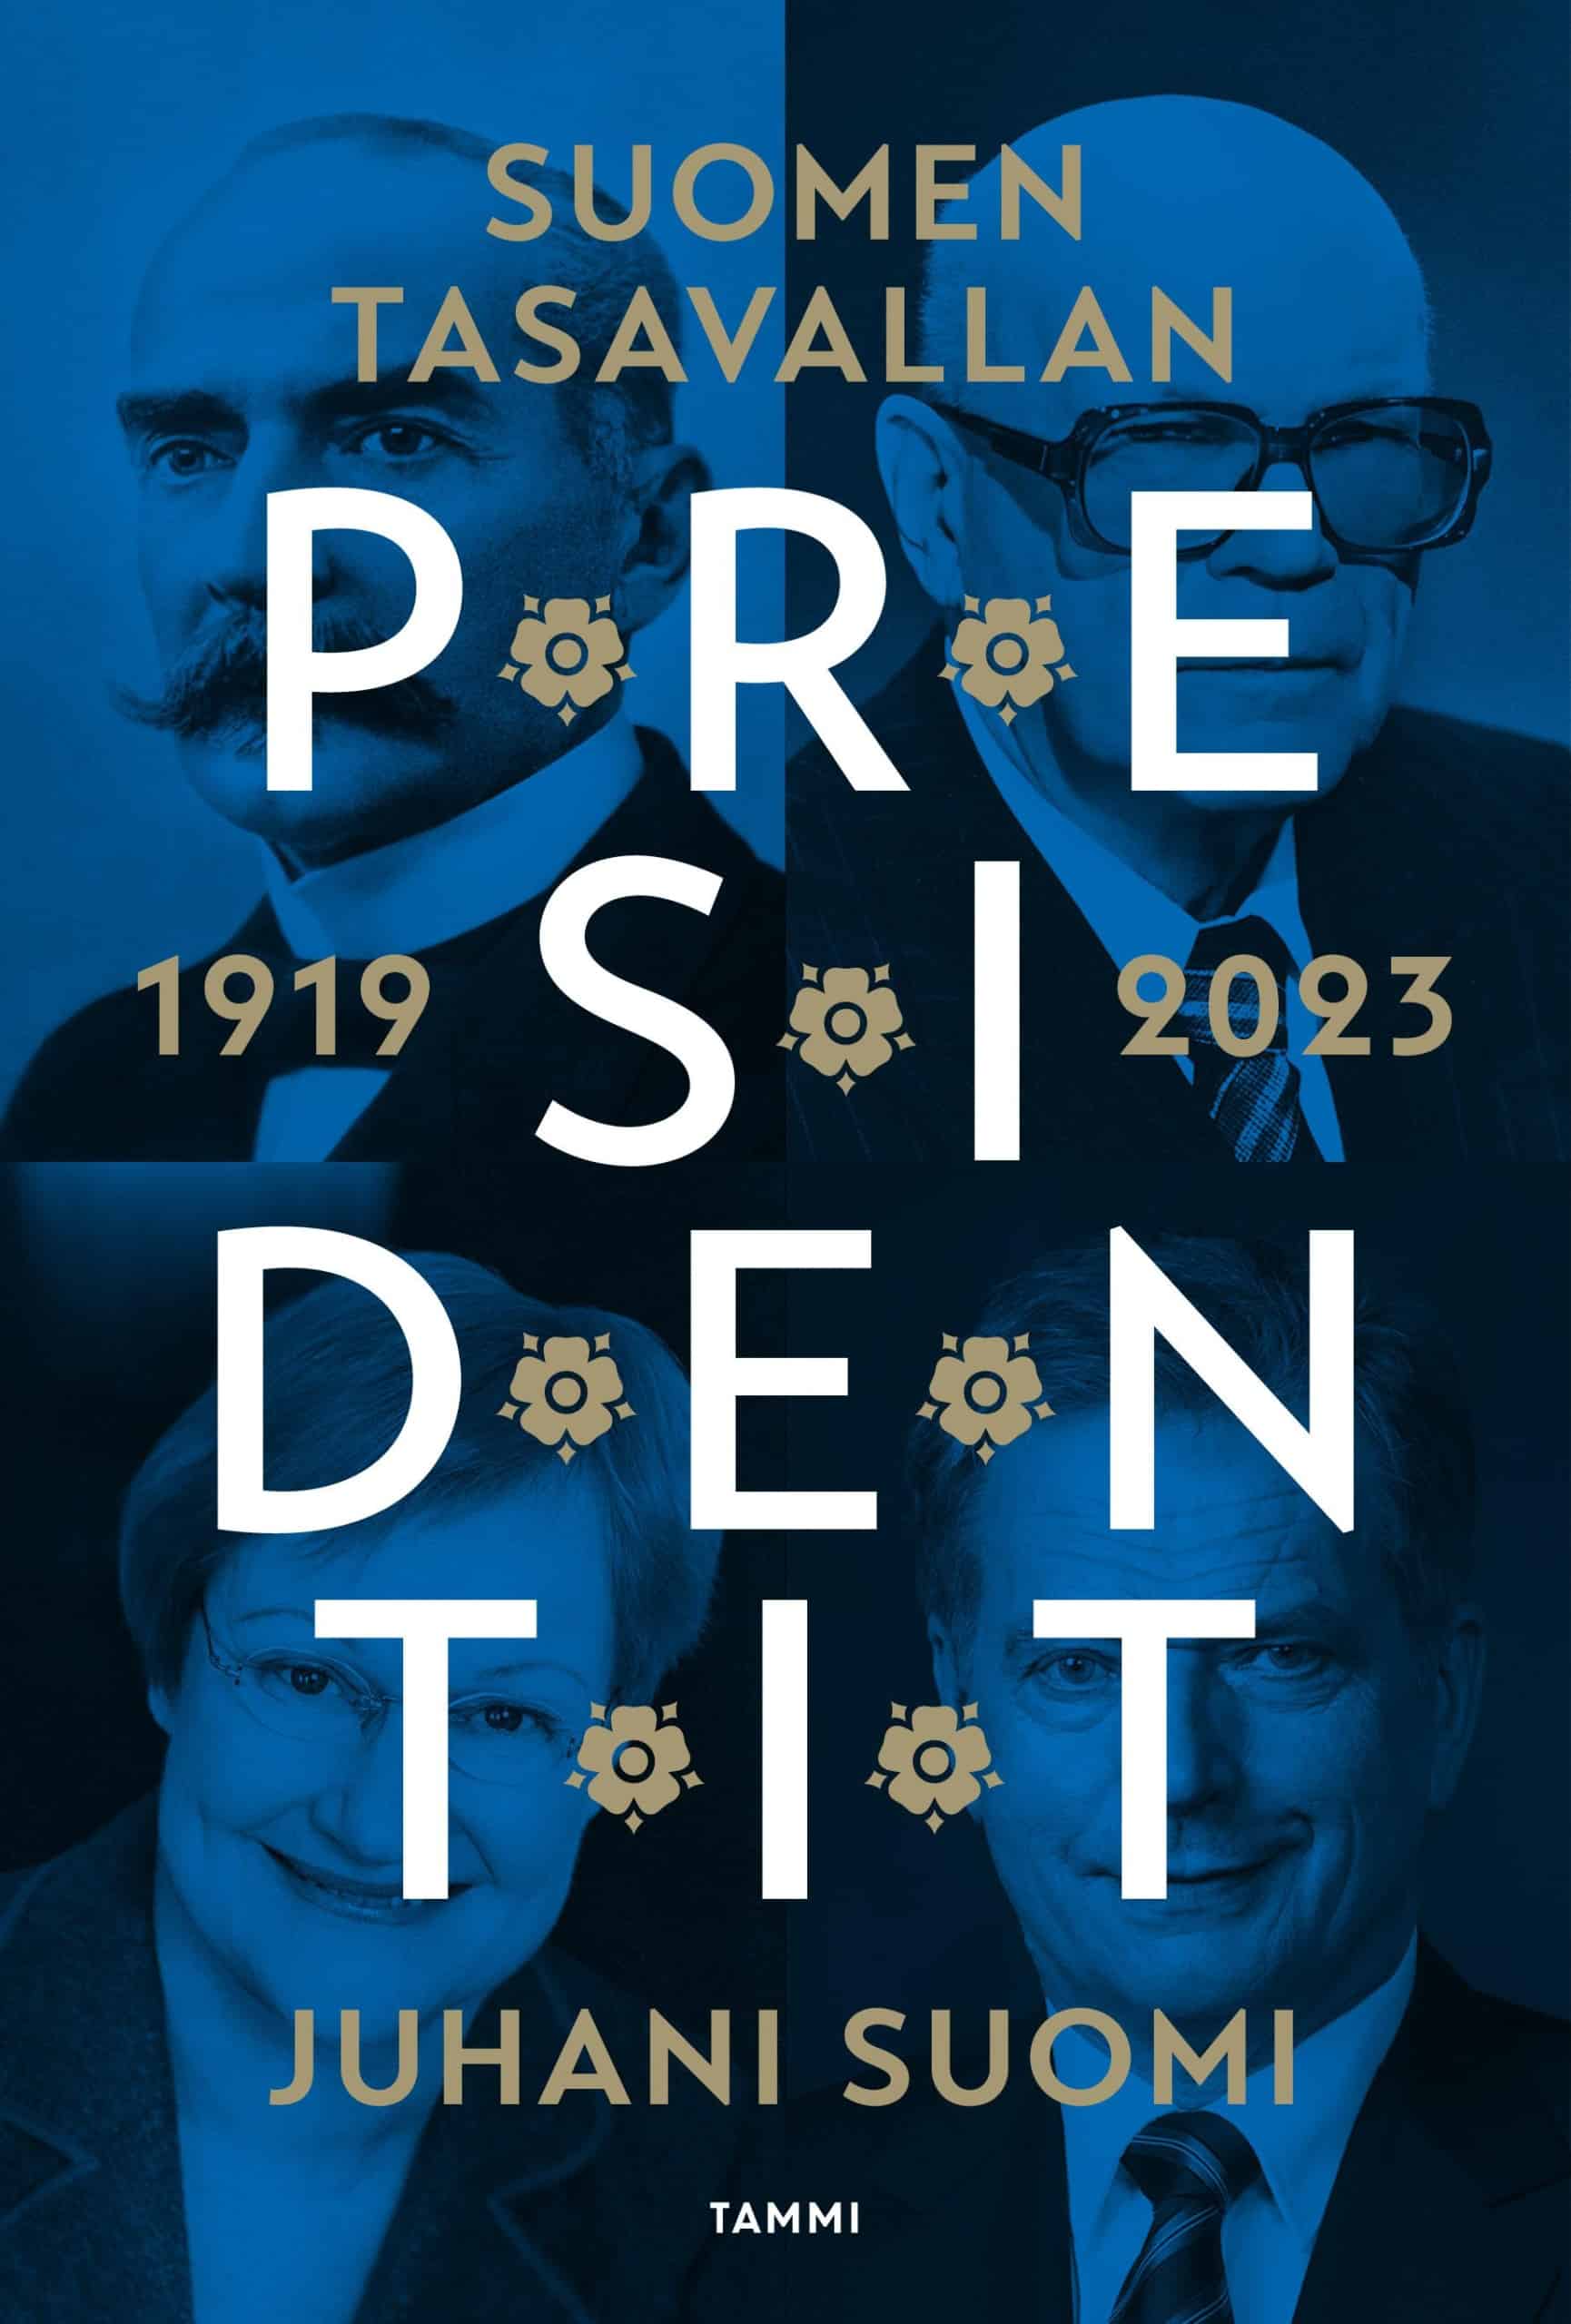 Suomen tasavallan presidentit 1919–2023